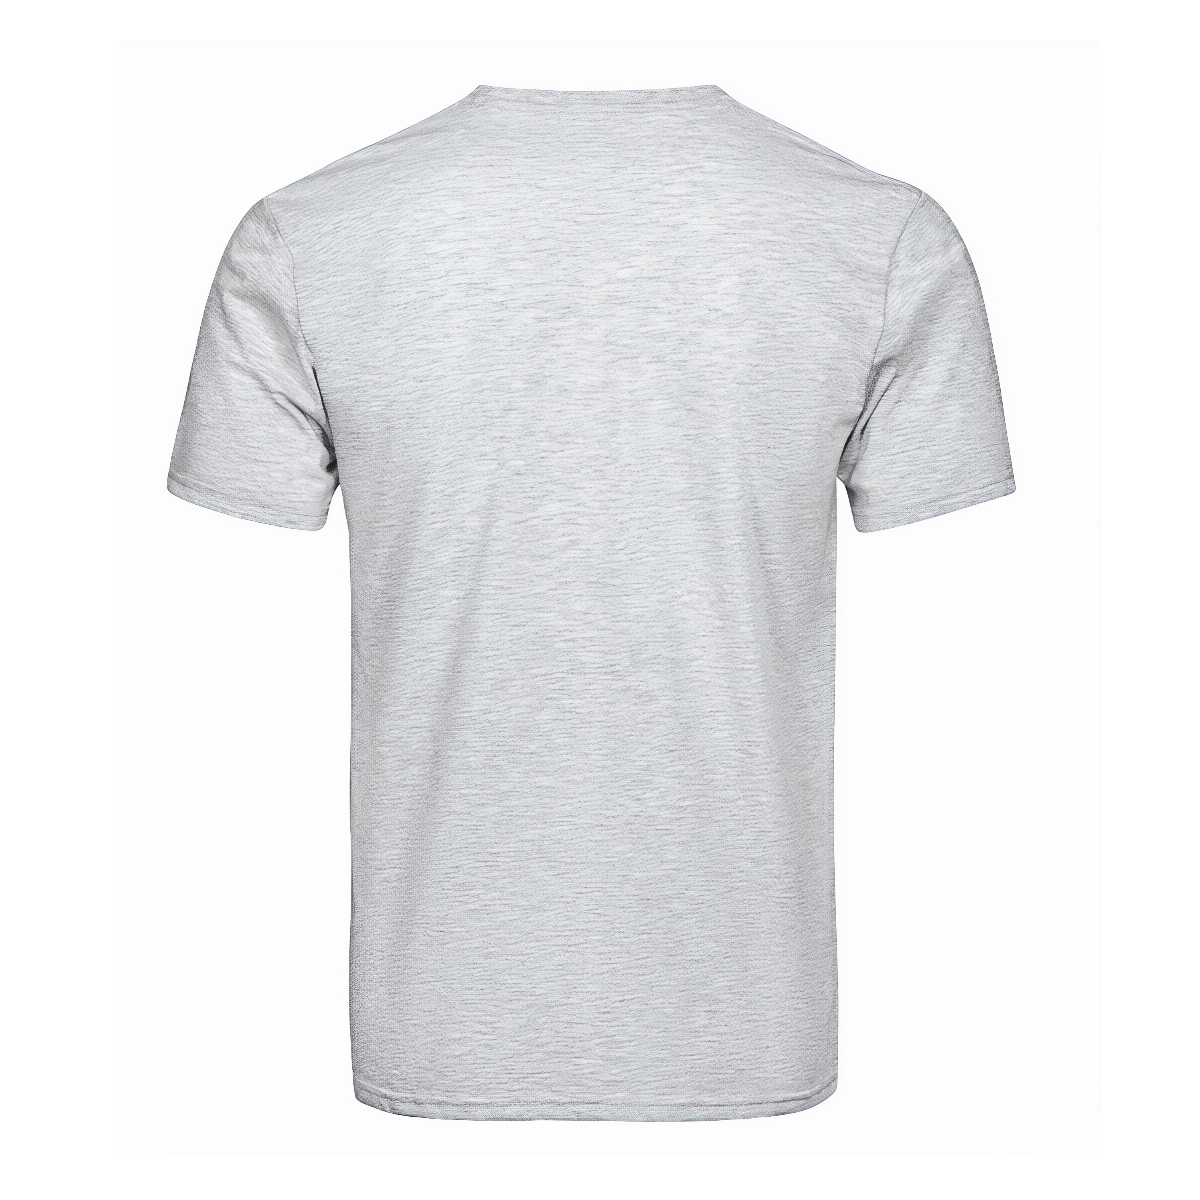 Trotter Tartan Crest T-shirt - I'm not yelling style